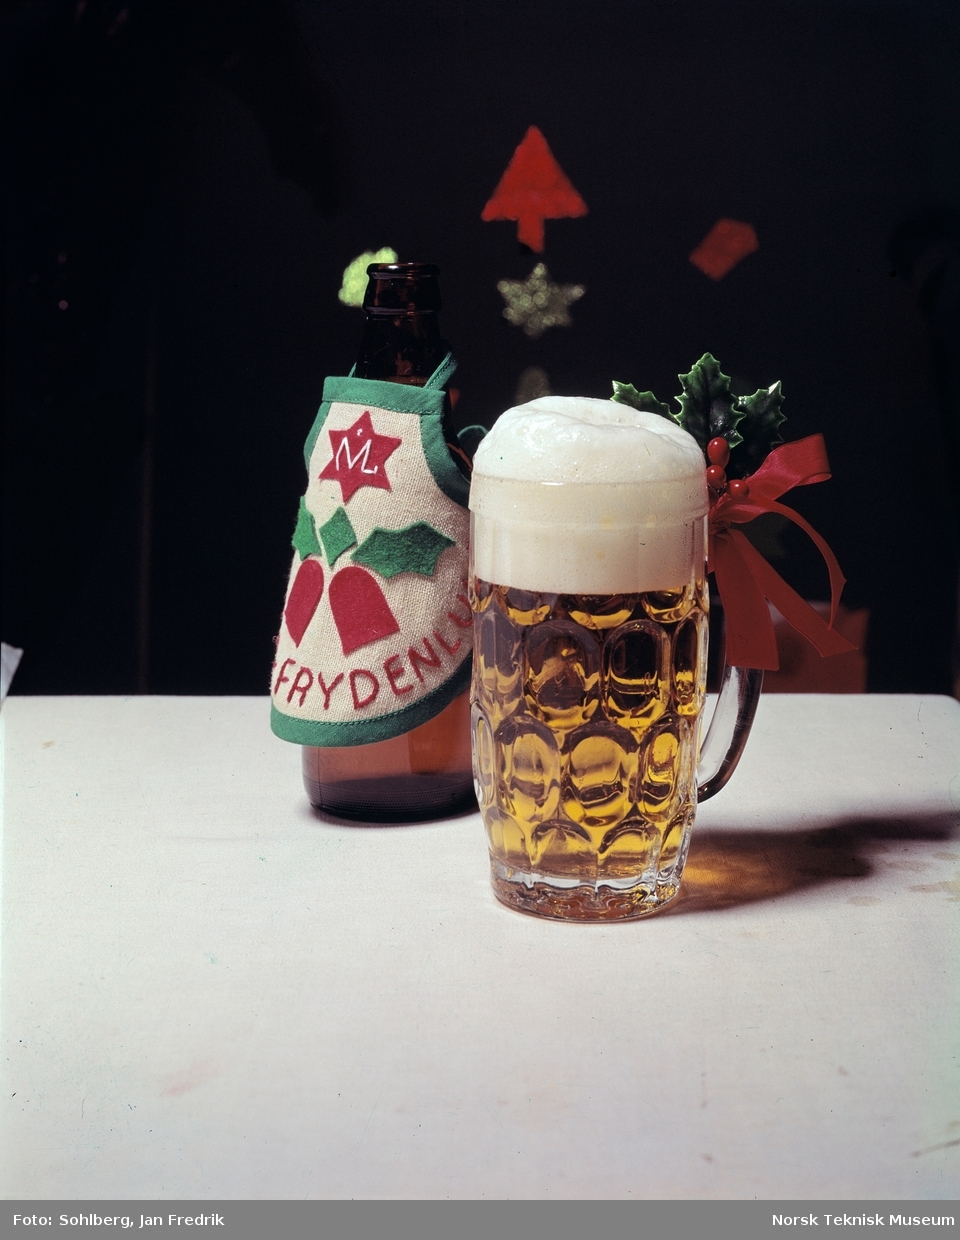 Humoristisk reklame for juleøl av merket Frydenlund. En ølflaske har fått et forkle med julemotiv og Frydenlunds logo rundt seg. Foran flaska står en seidel med skummende øl.